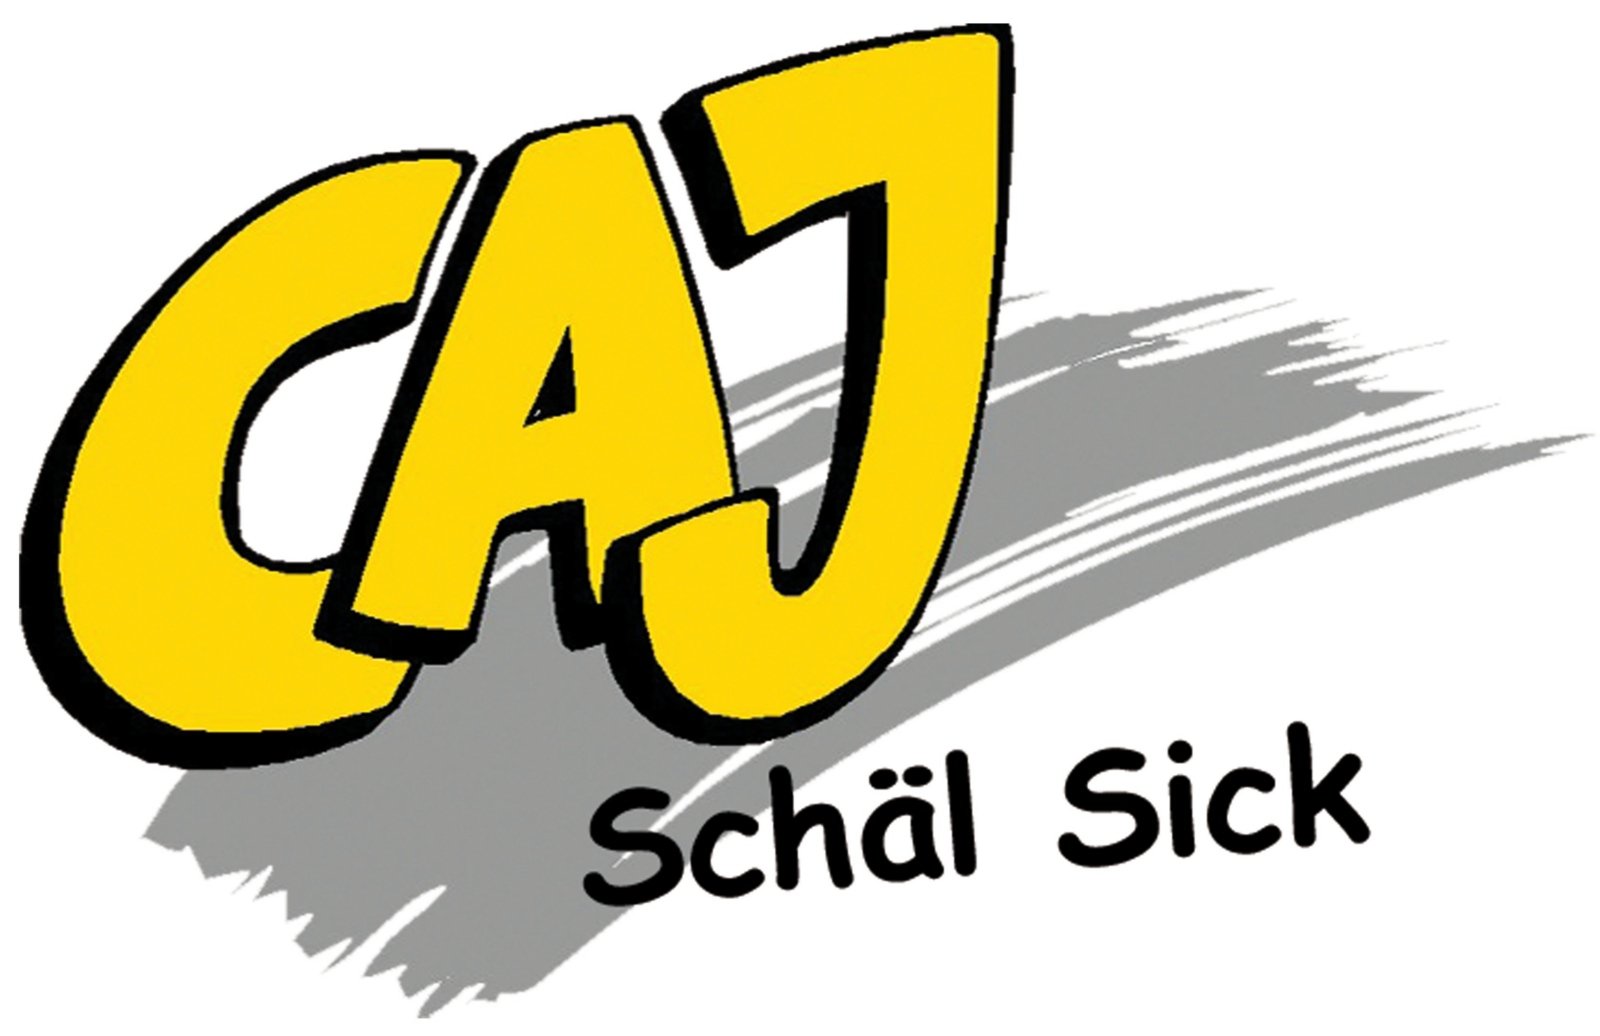 CAJ-Schl-Sick_freisteller_cmyk